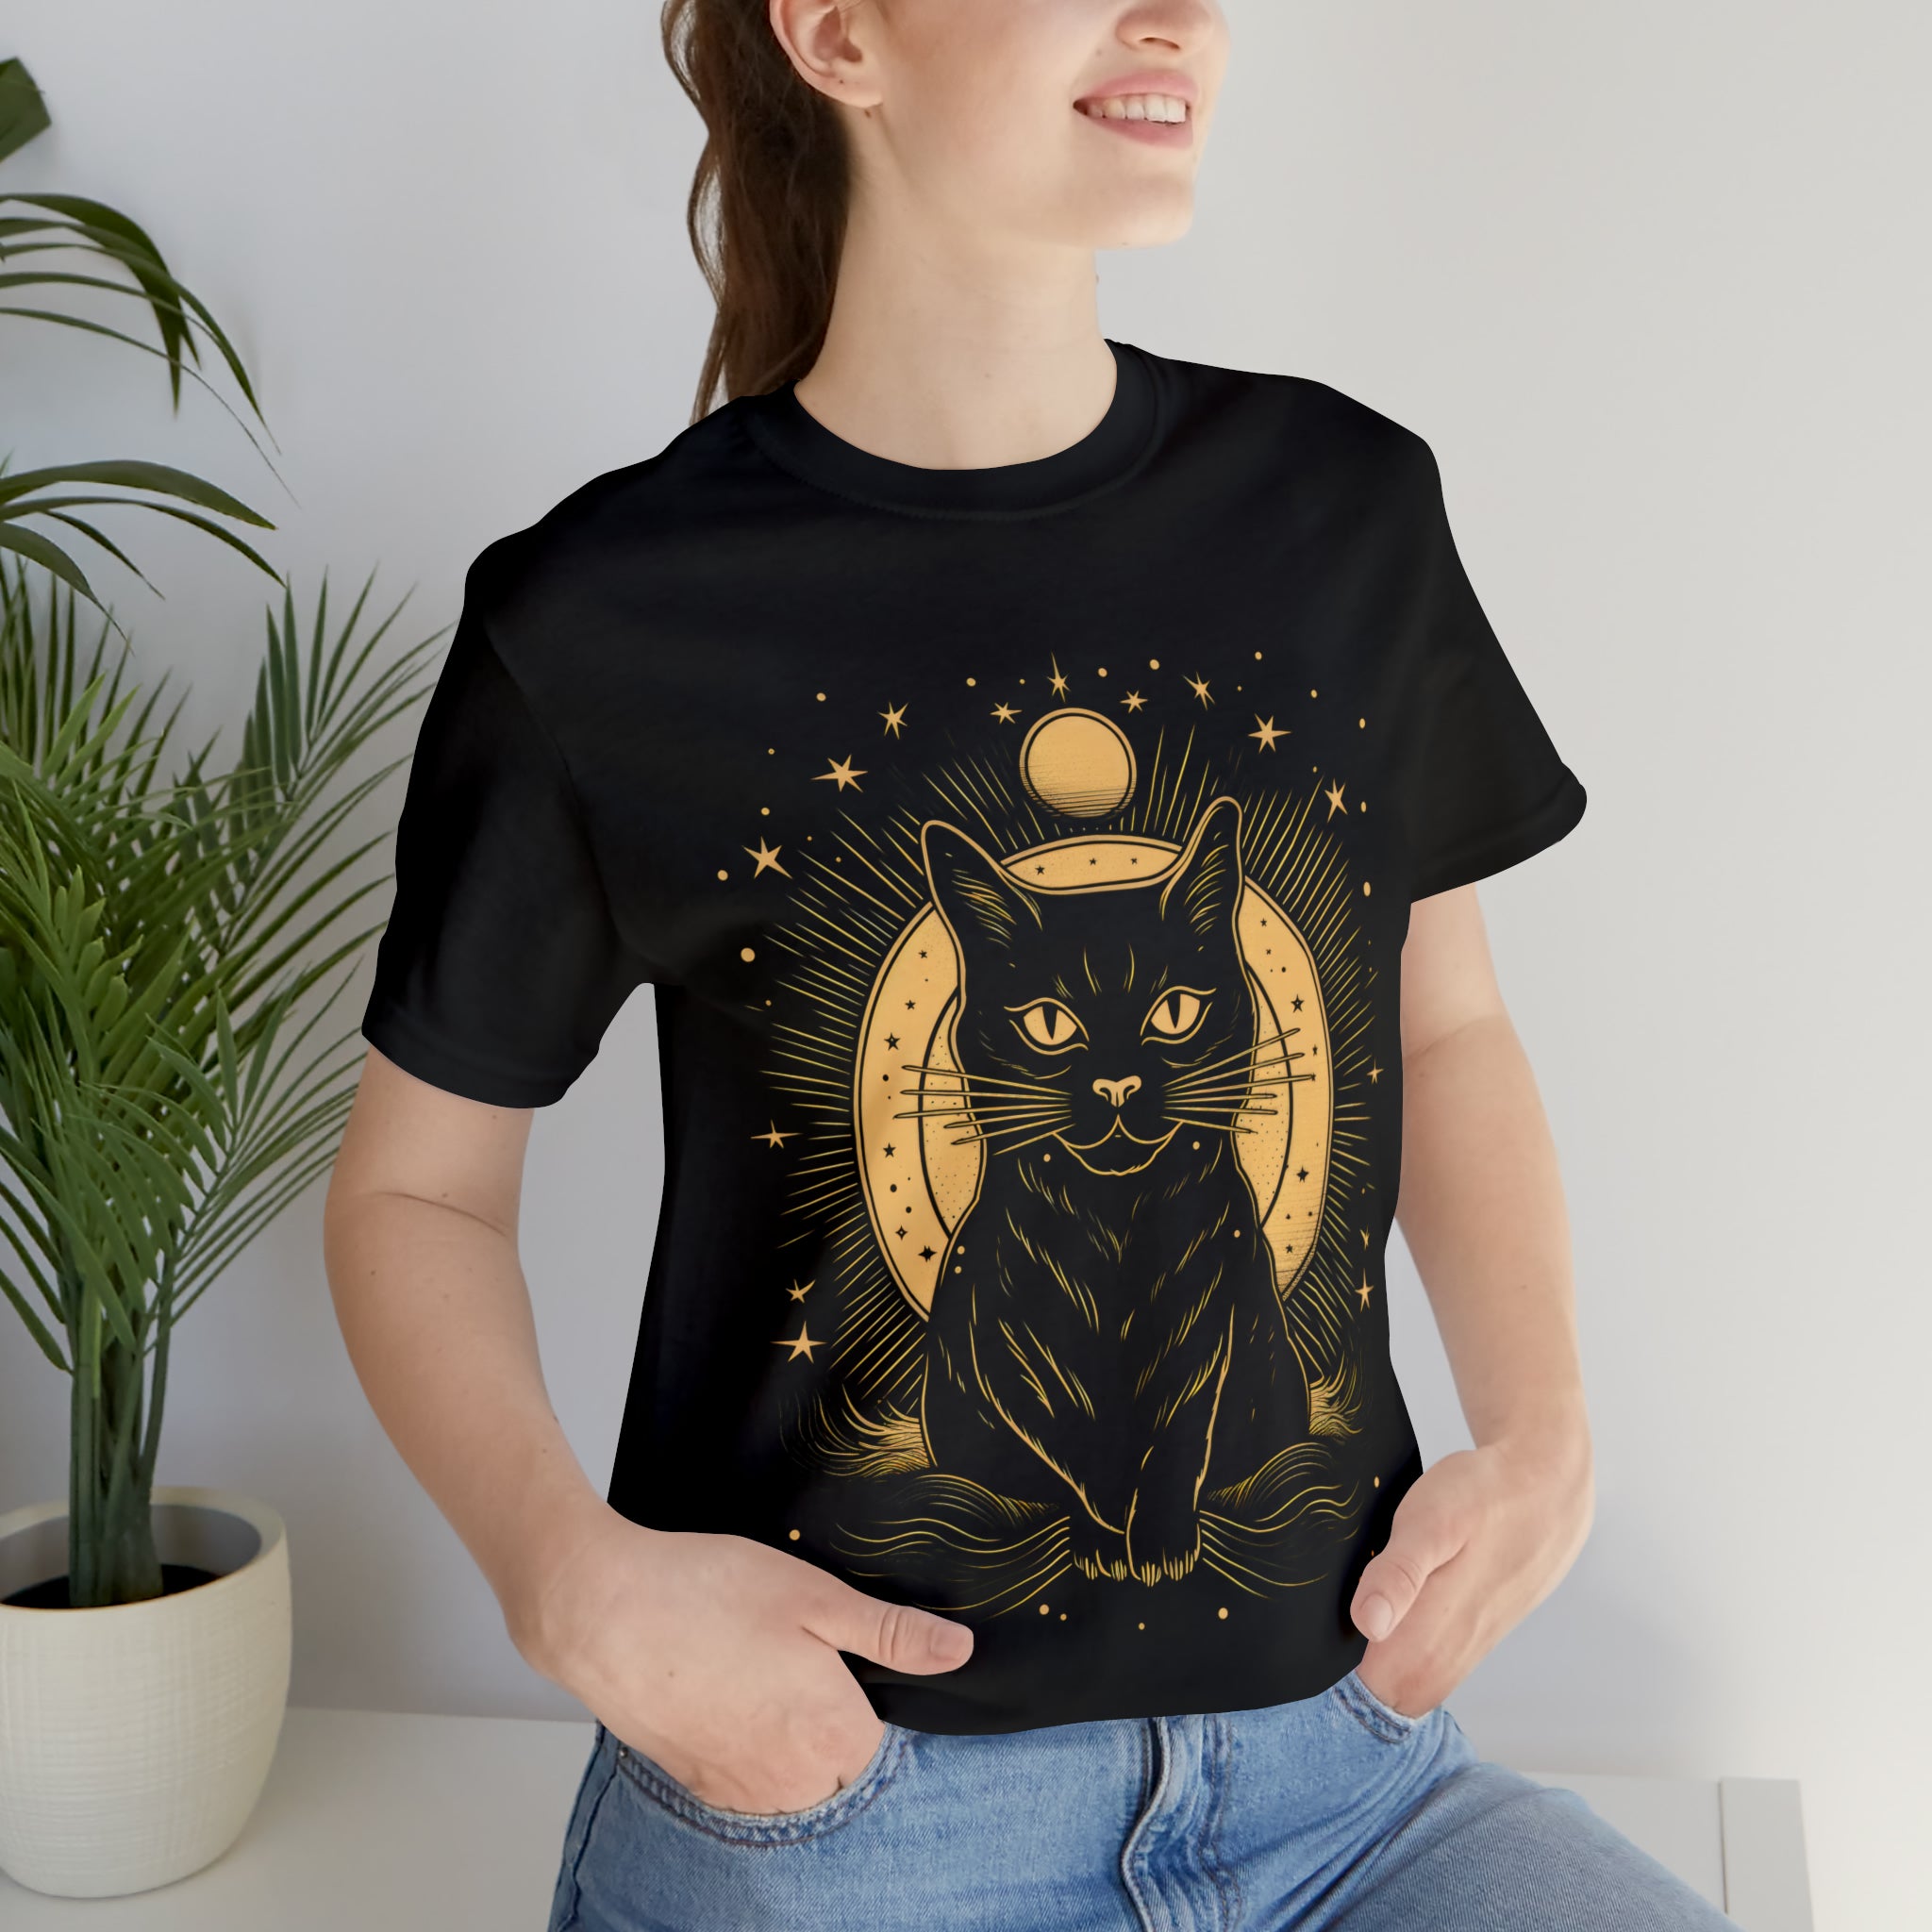 Cosmic kitty t-shirt lifestyle